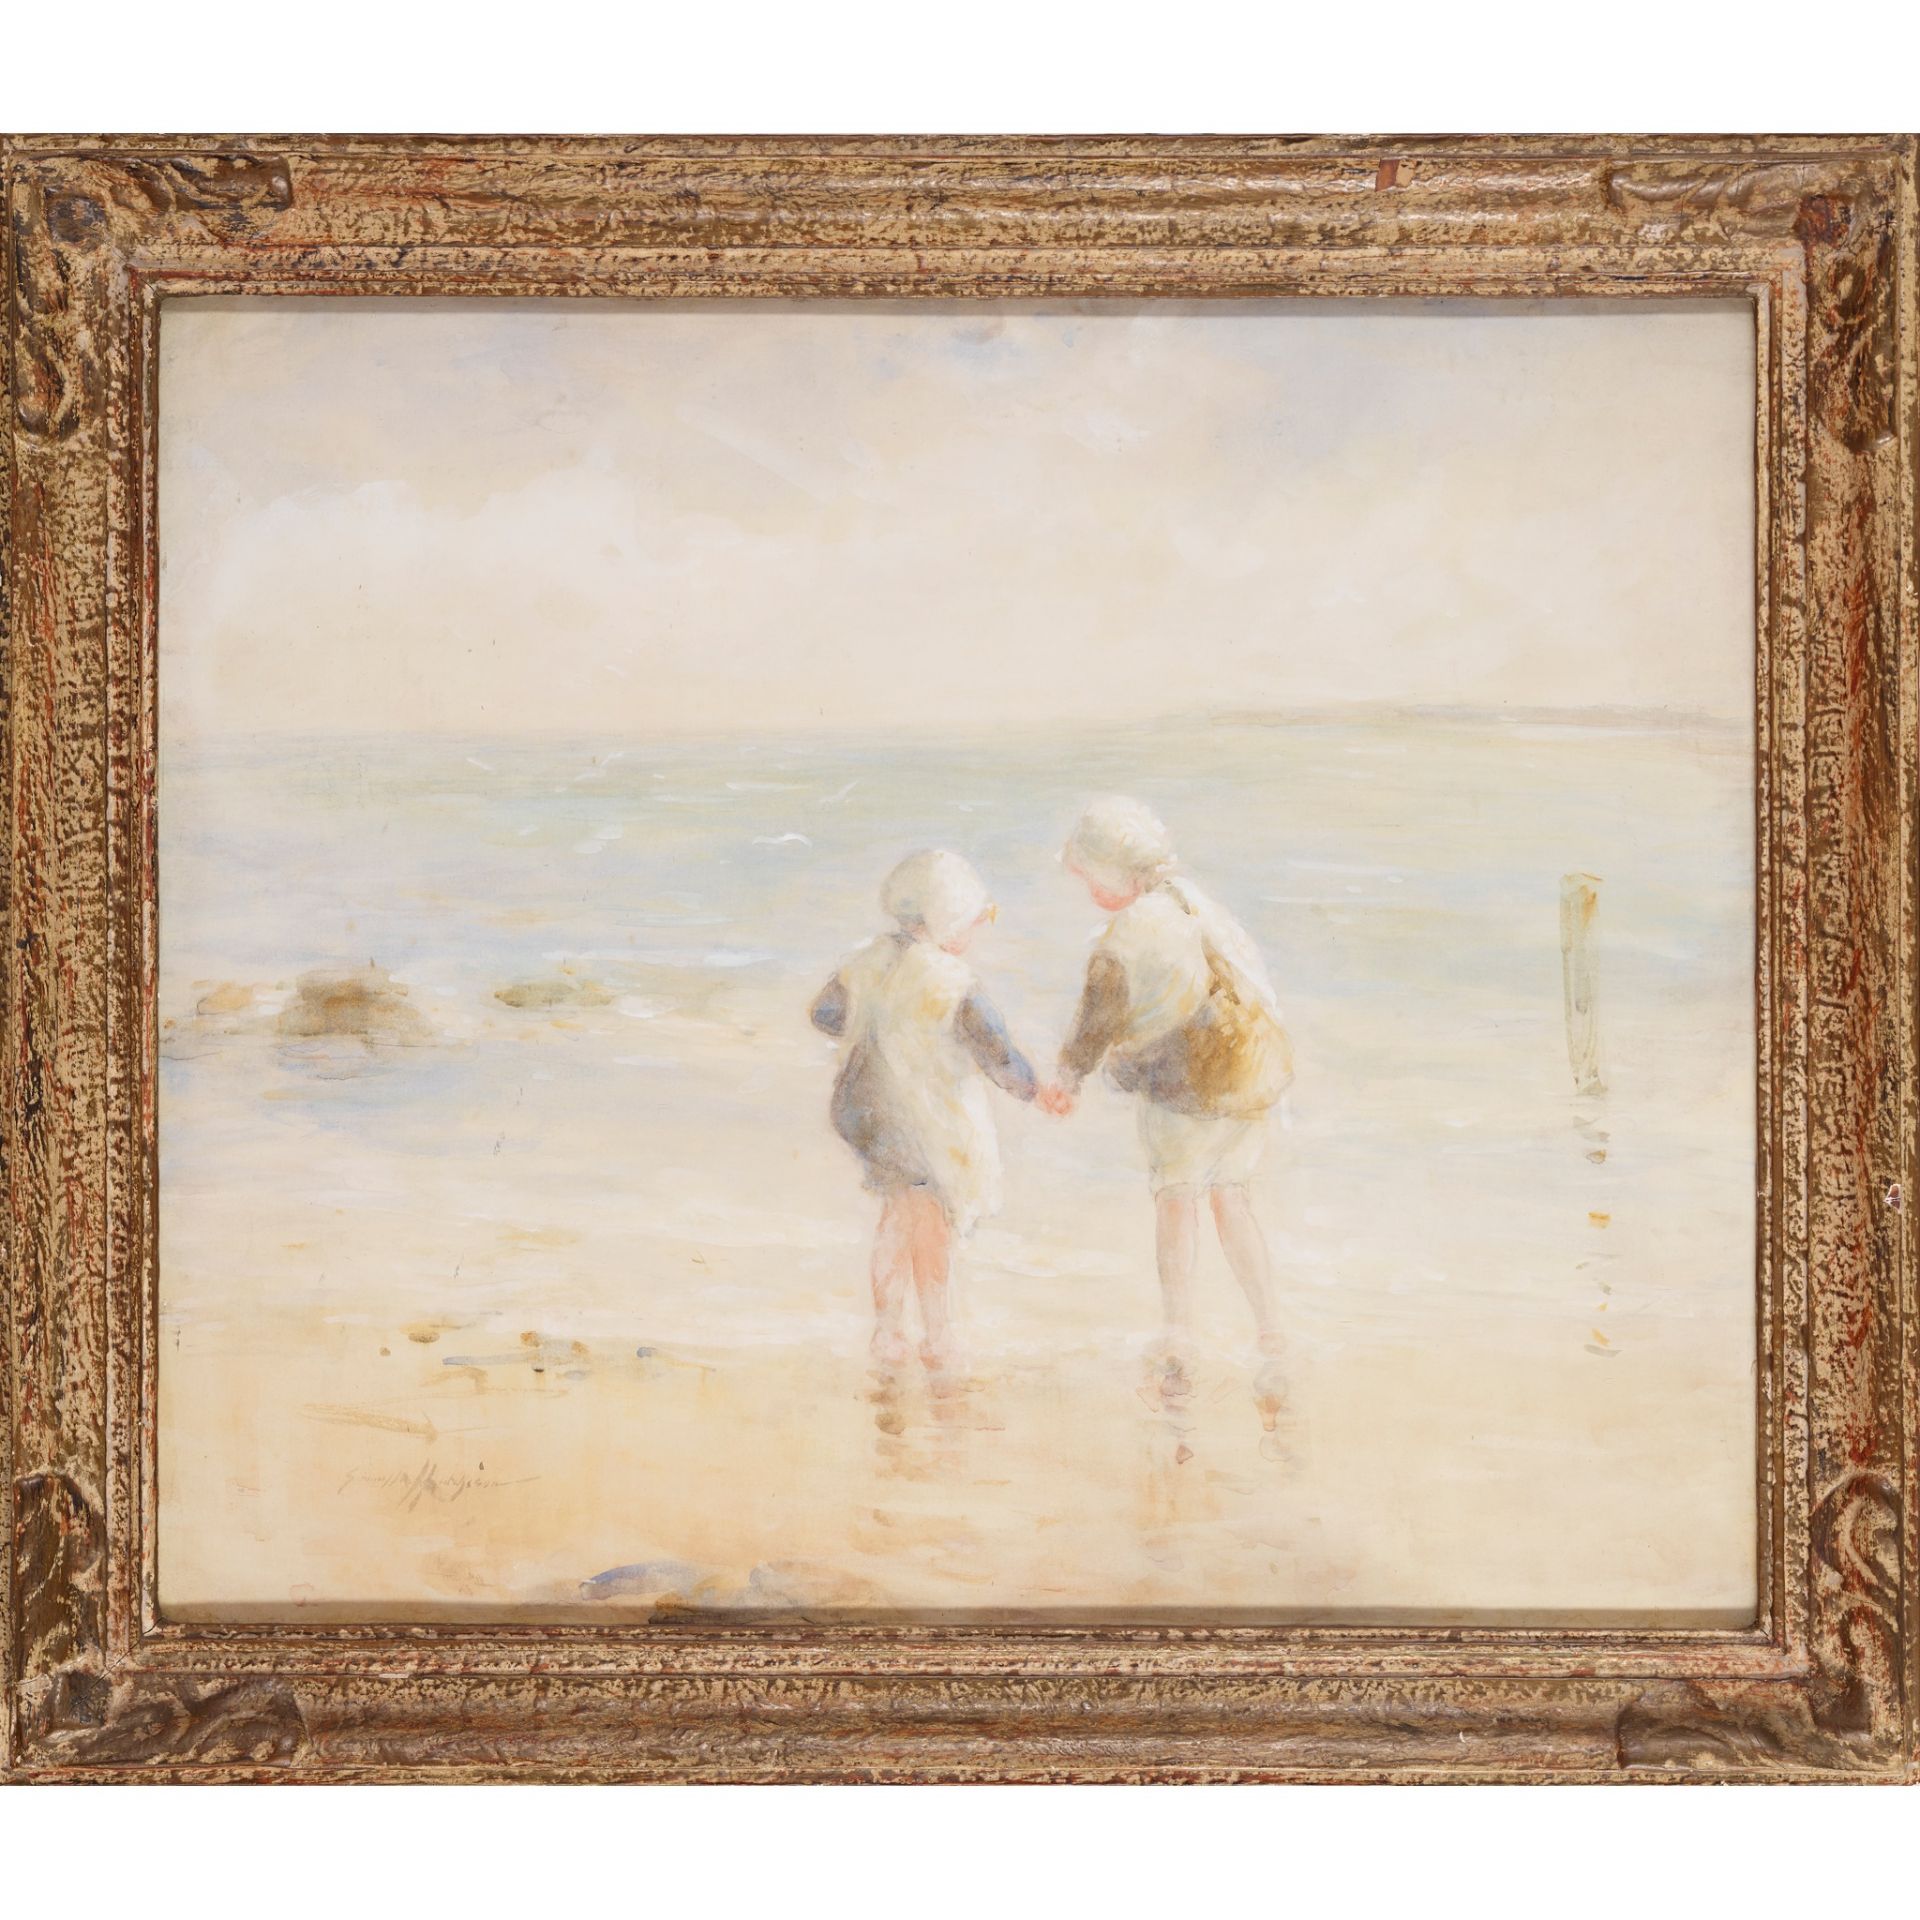 ROBERT GEMMELL HUTCHISON R.B.A., R.O.I., R.S.A., R.S.W. (SCOTTISH 1860-1936) ON THE BEACH, - Image 2 of 3